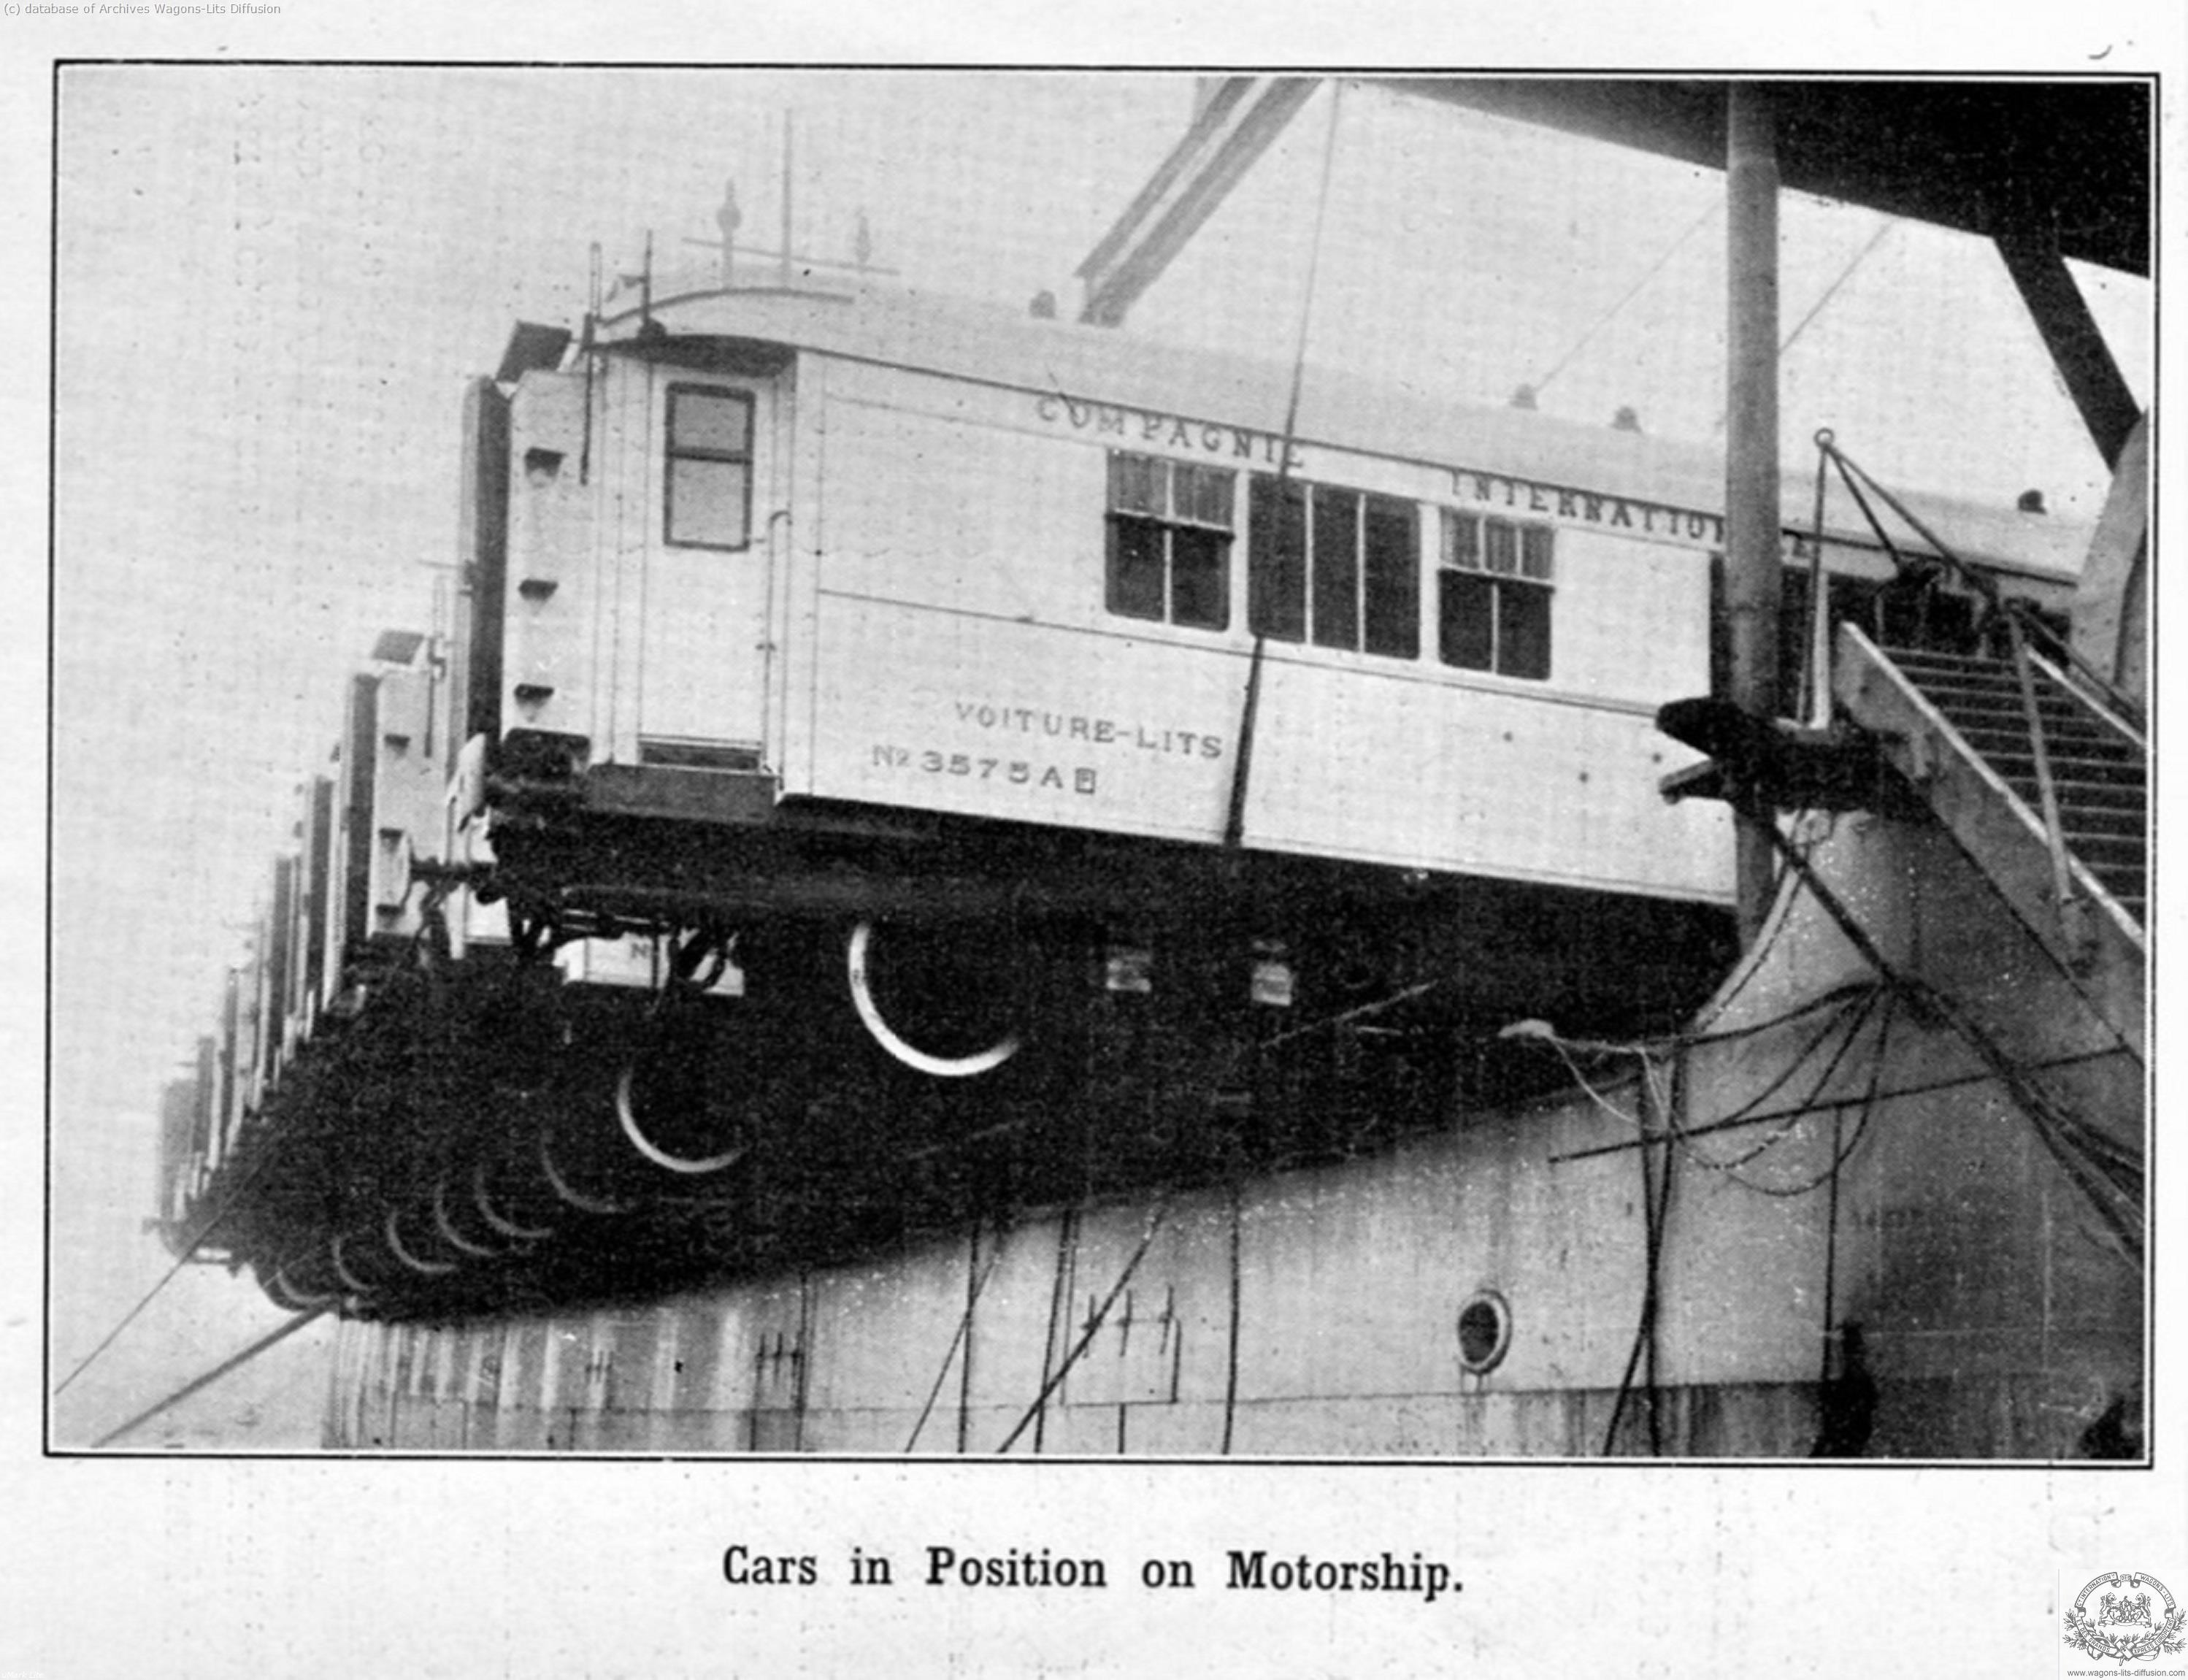 Wl sleeping cars 3575 for service in egypt birmingham railway carriage 1929 2